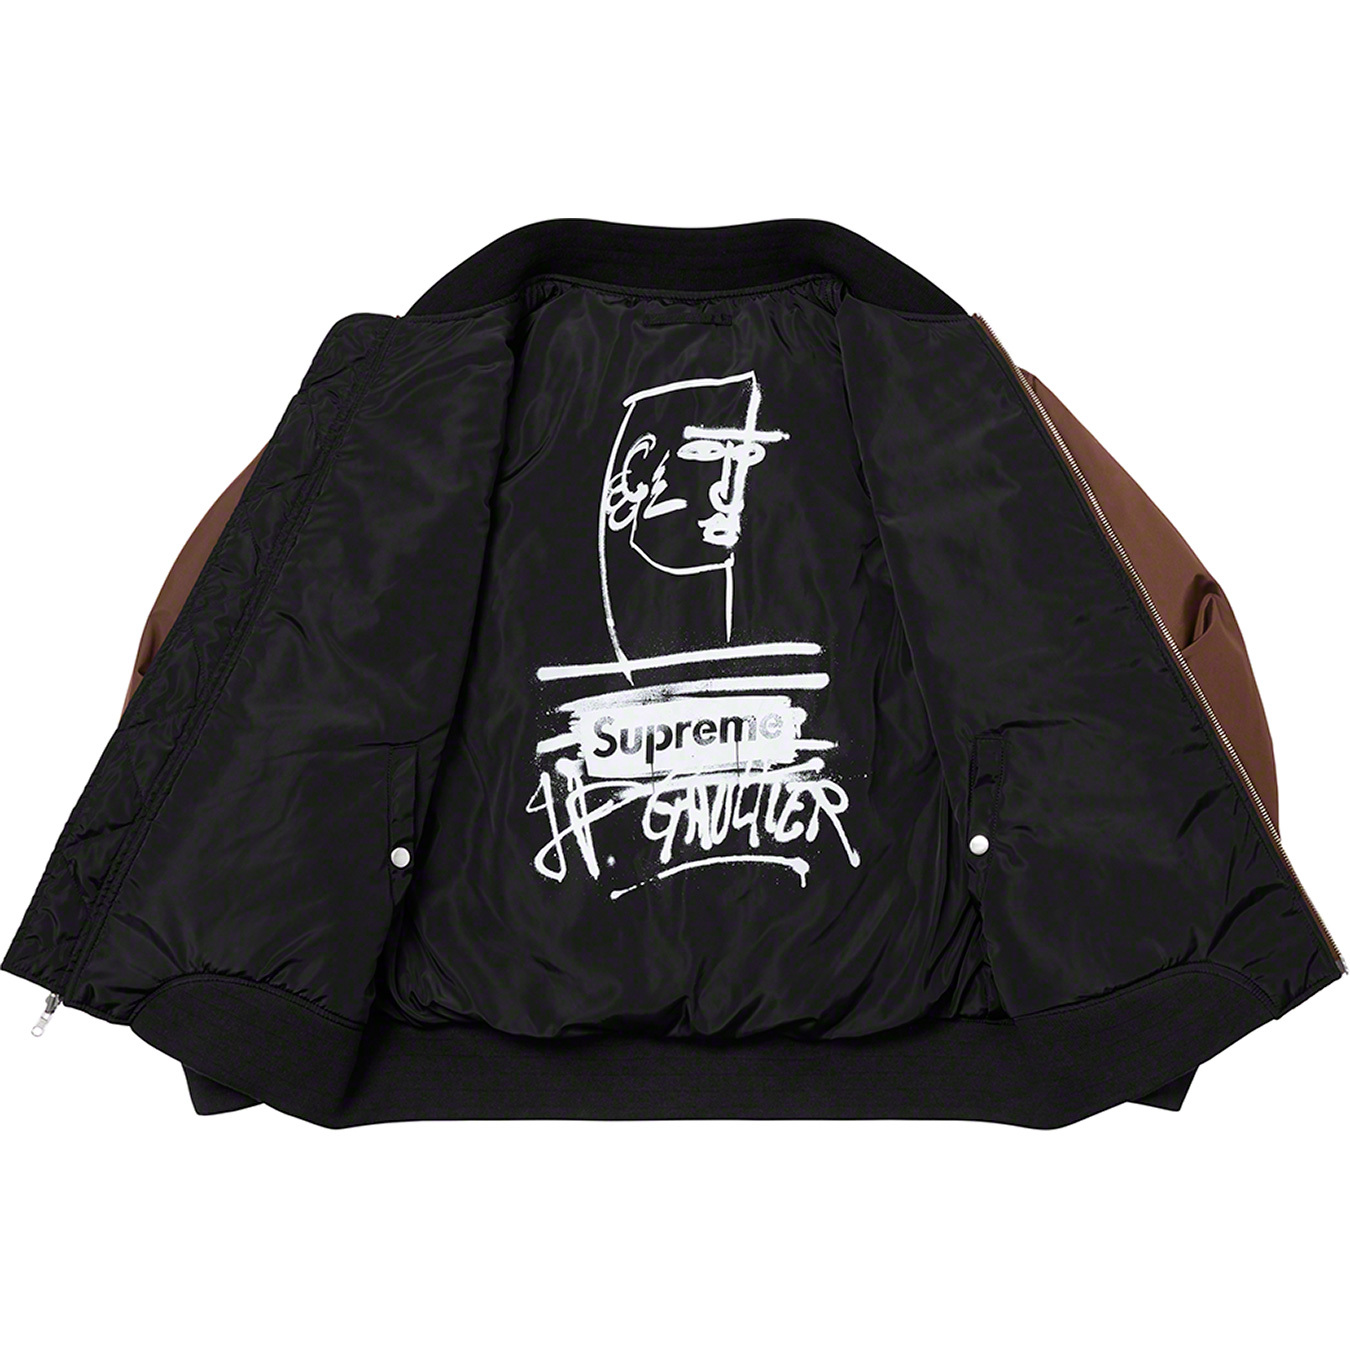 Supreme®/Jean Paul Gaultier® Reversible Backpack MA-1 - Supreme 